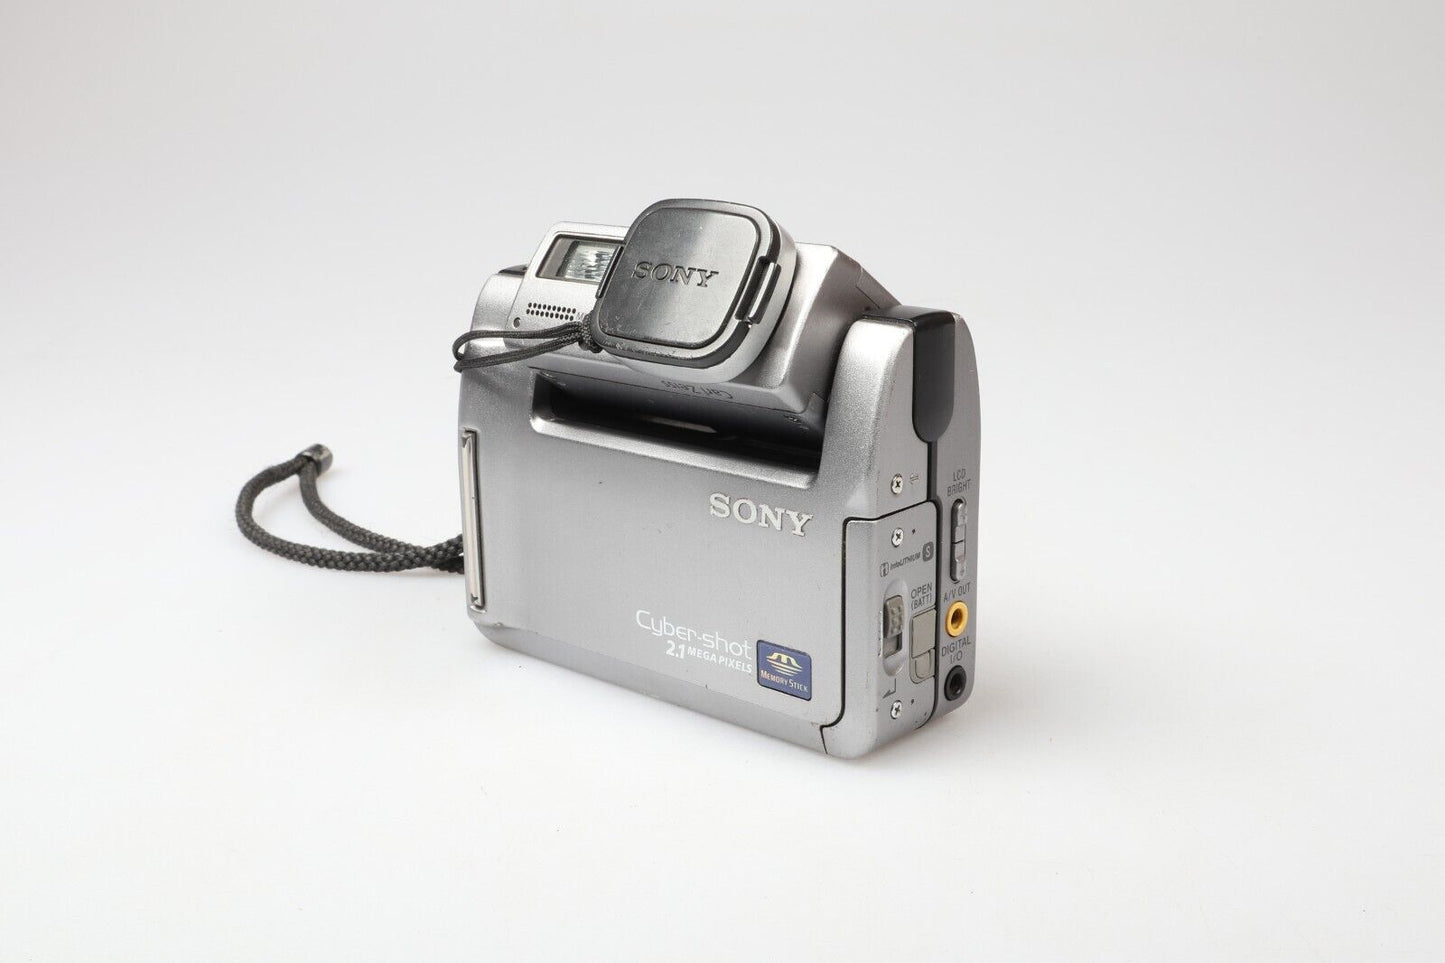 Sony Cybershot DSC-F55E | Digital Compact Camera | 2.1MP | Silver